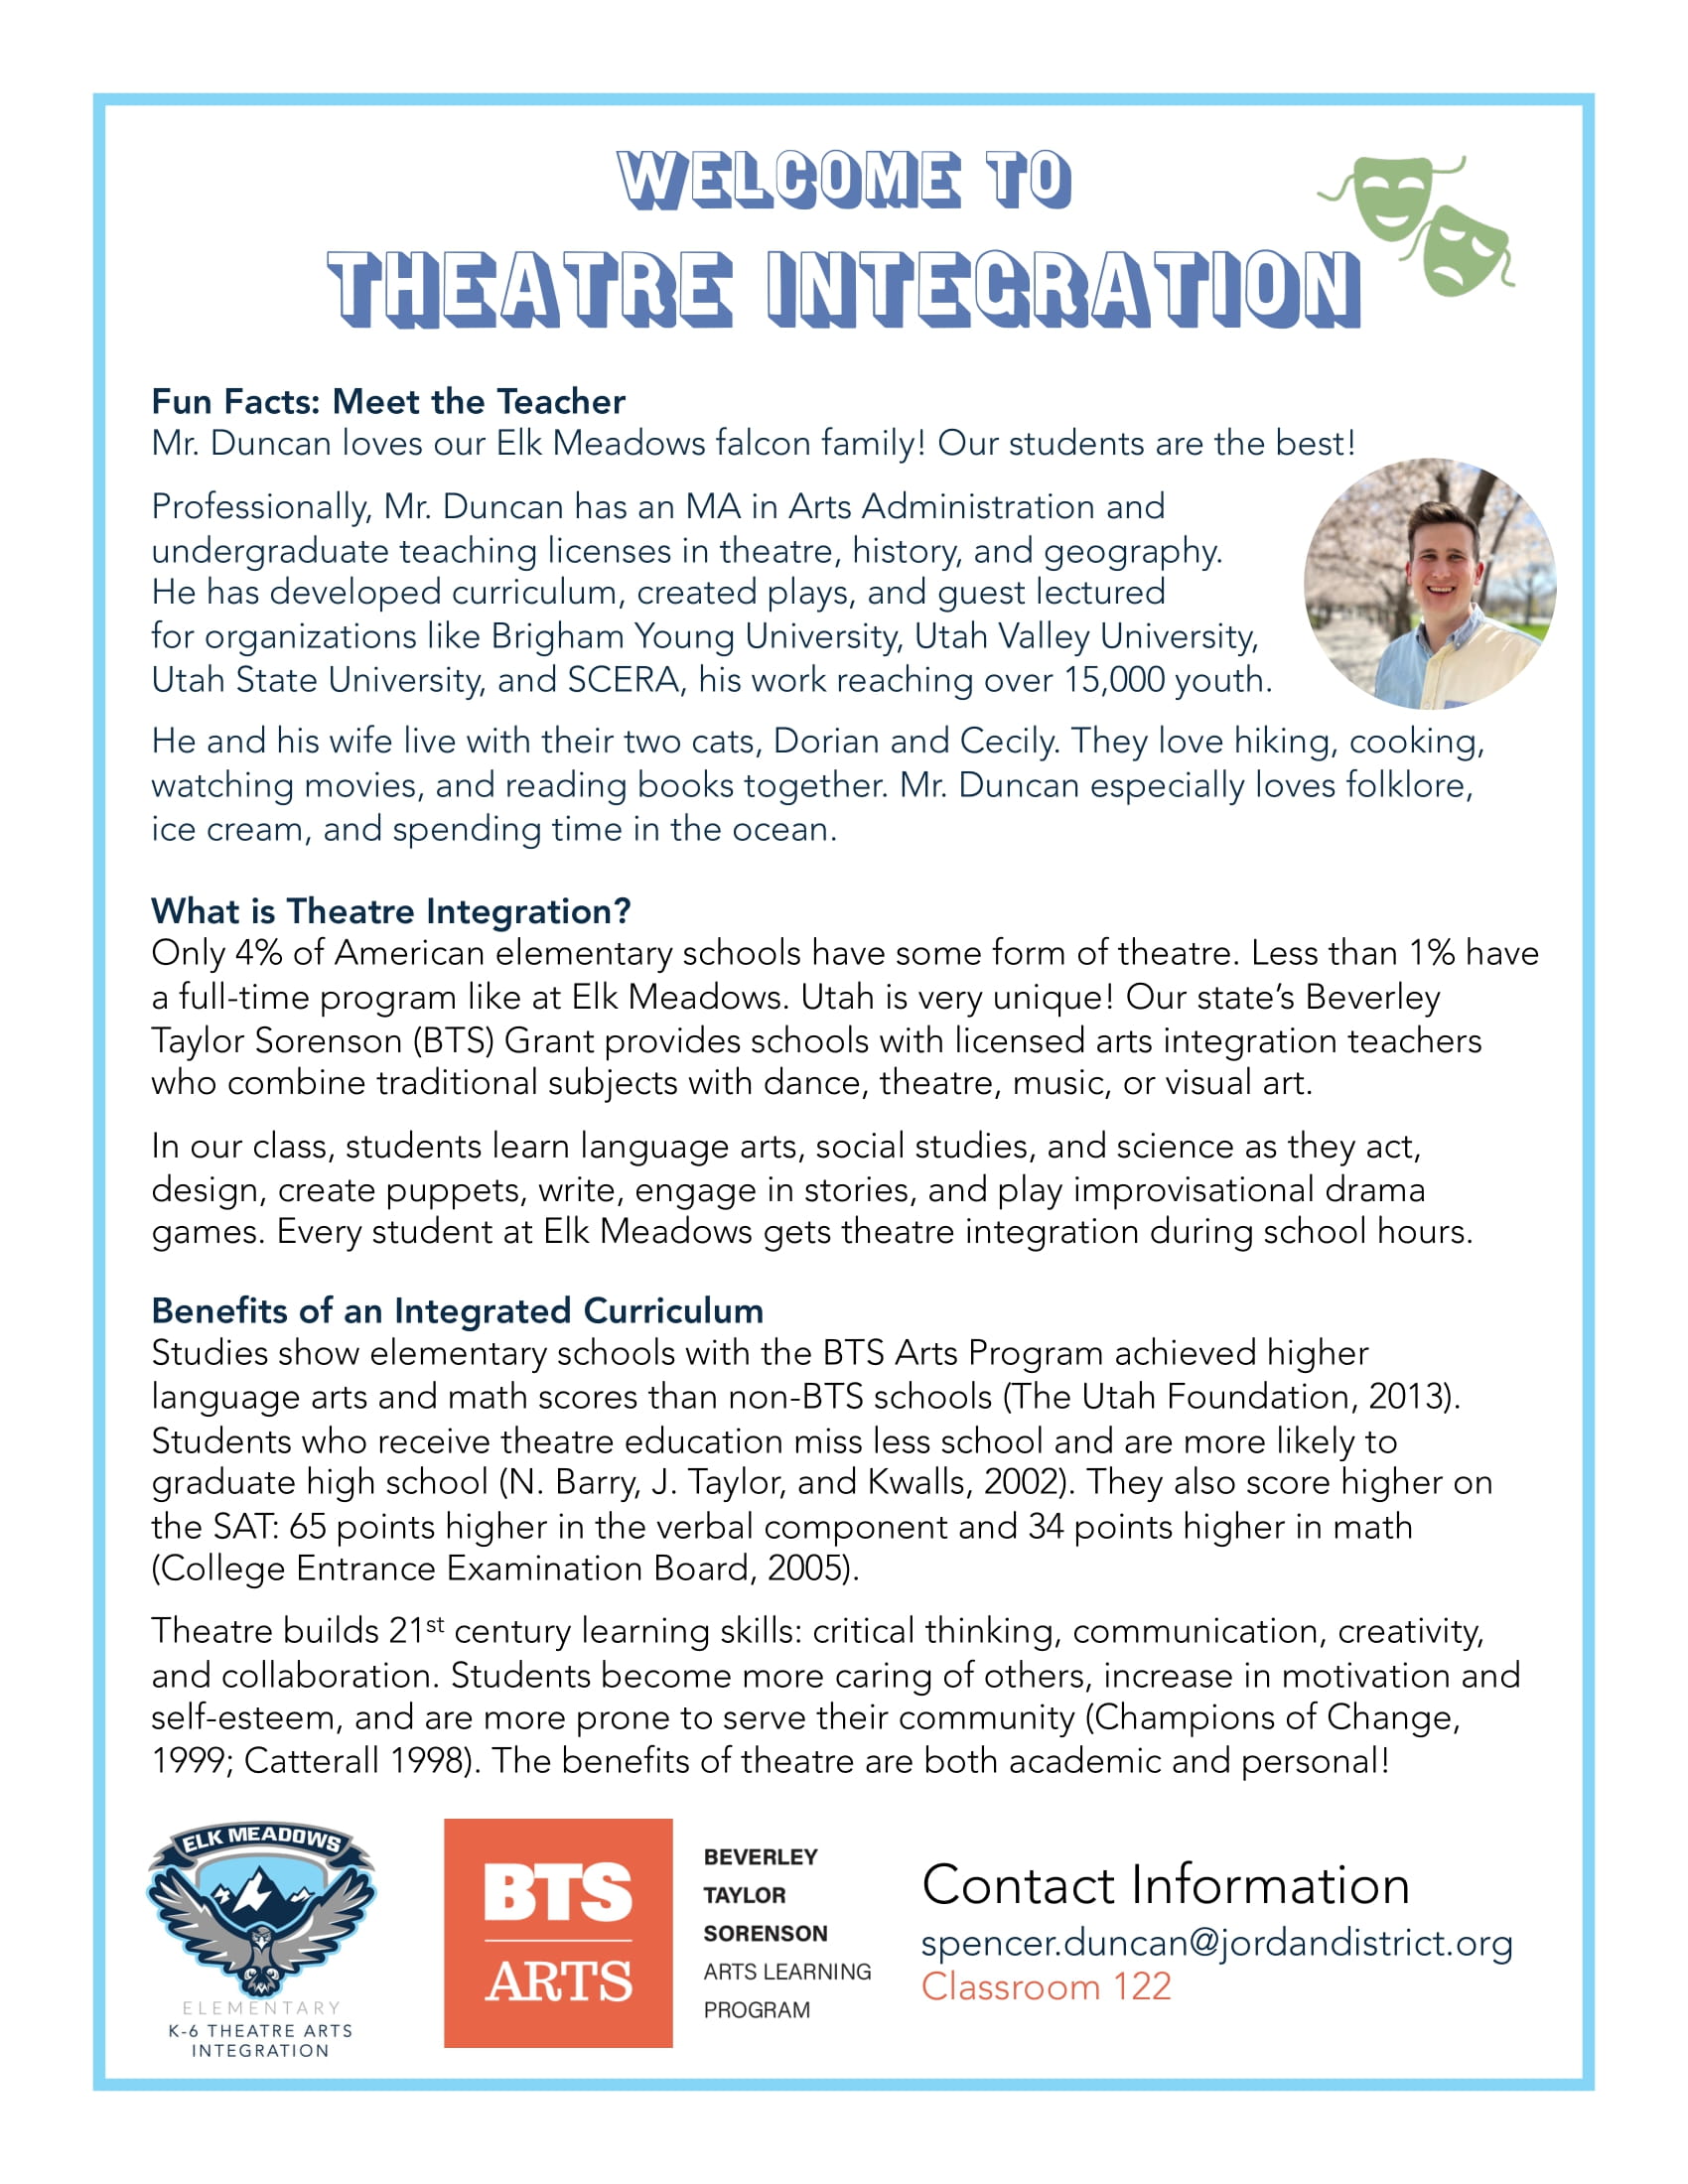 Theatre Integration Flyer